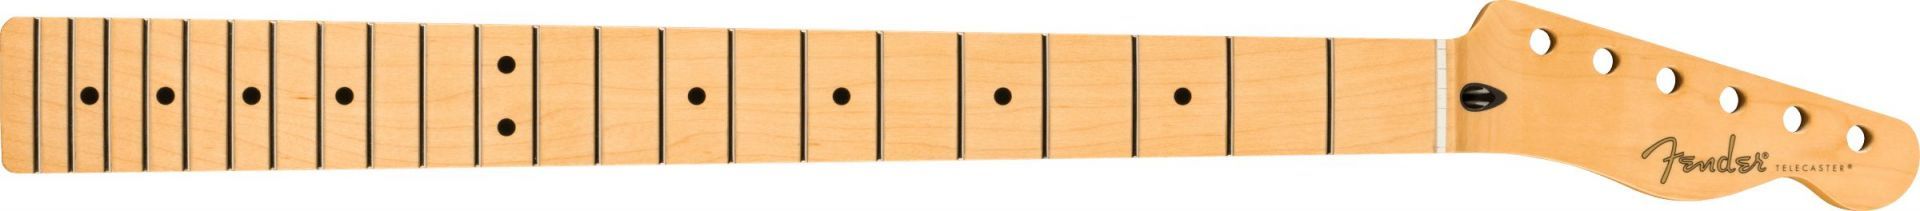 Fender Sub-Sonic Baritone Telecaster Neck 22 Medium Jumbo Frets Maple Natural